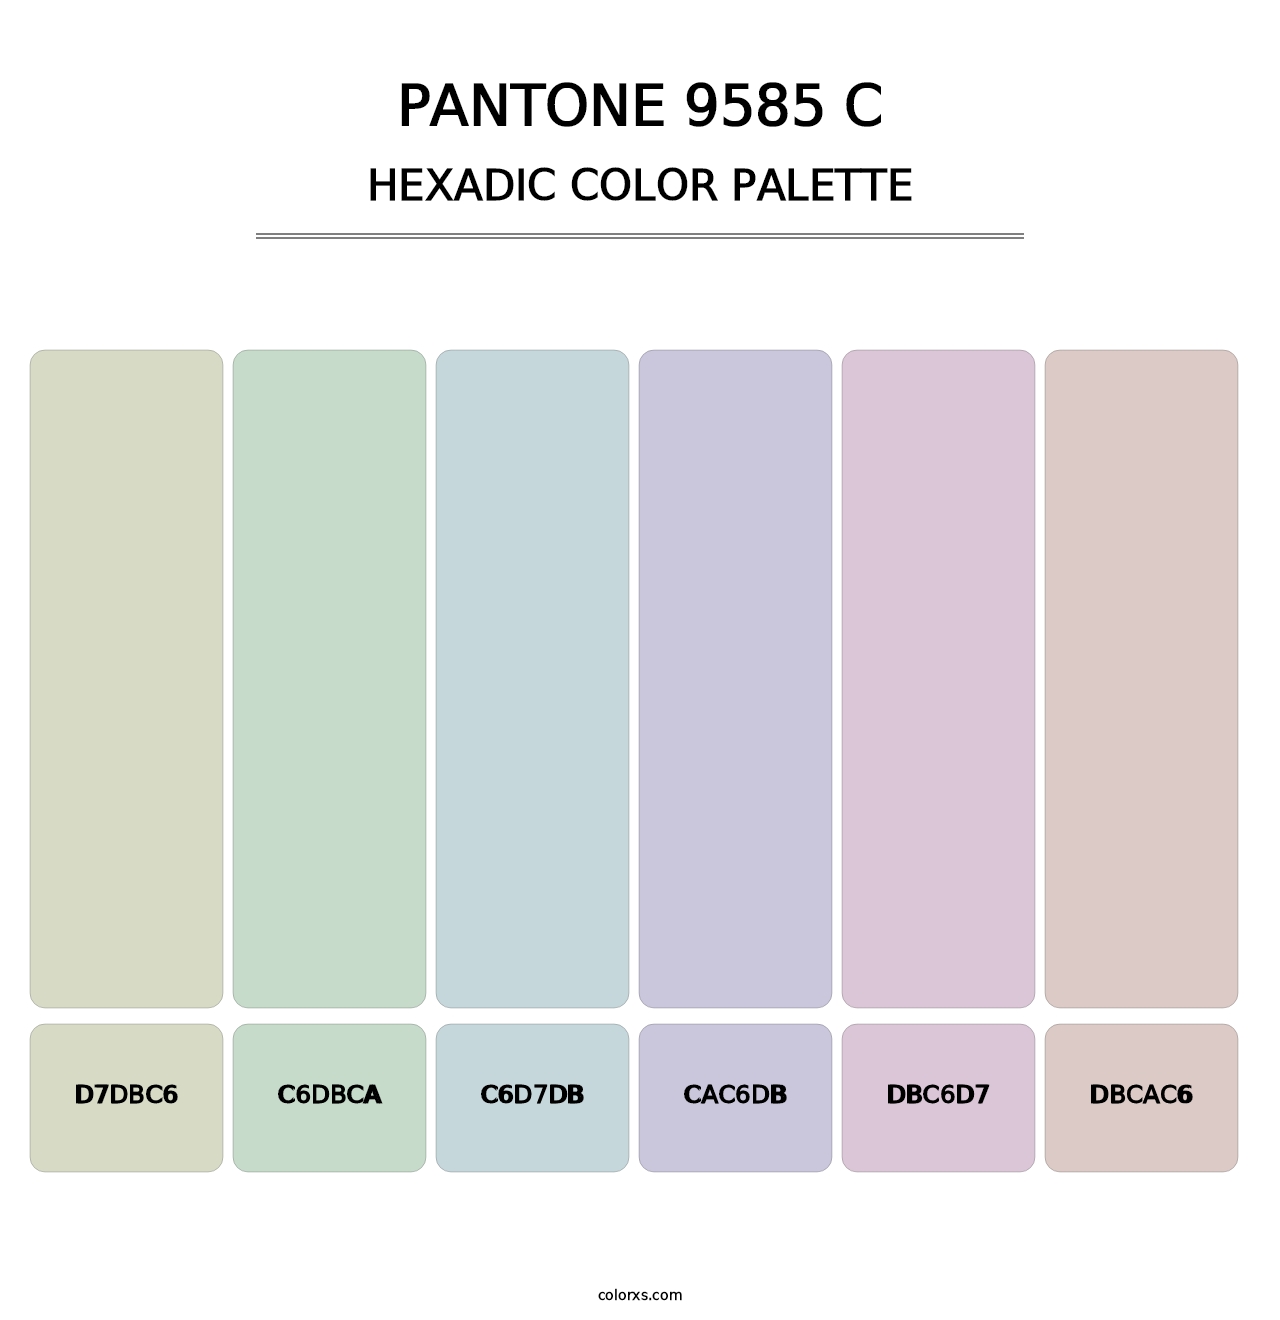 PANTONE 9585 C - Hexadic Color Palette